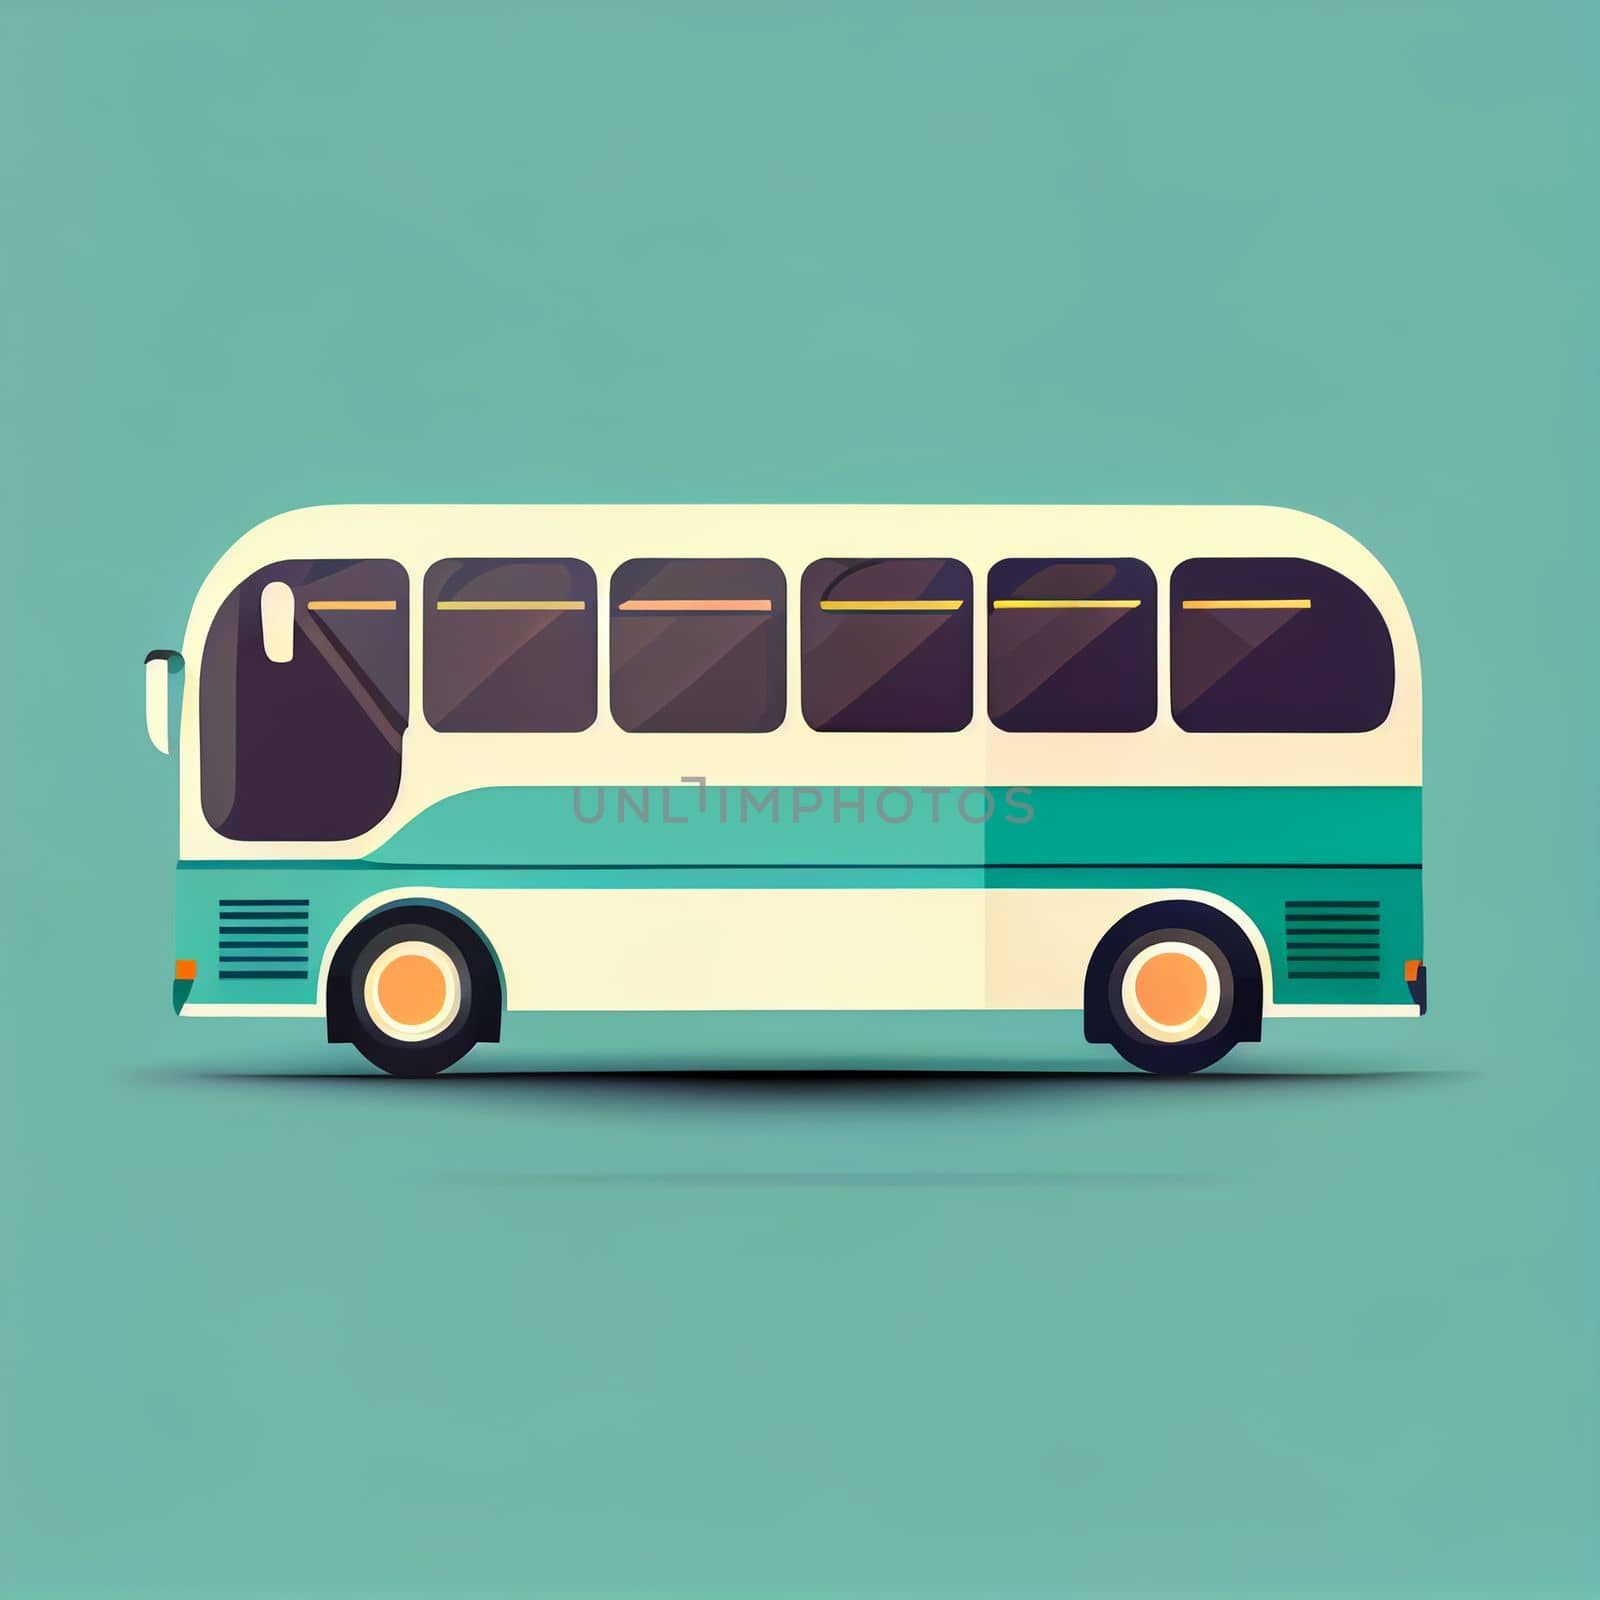 Modern flat design of Transport public transportable bus for transportation in city. by FokasuArt